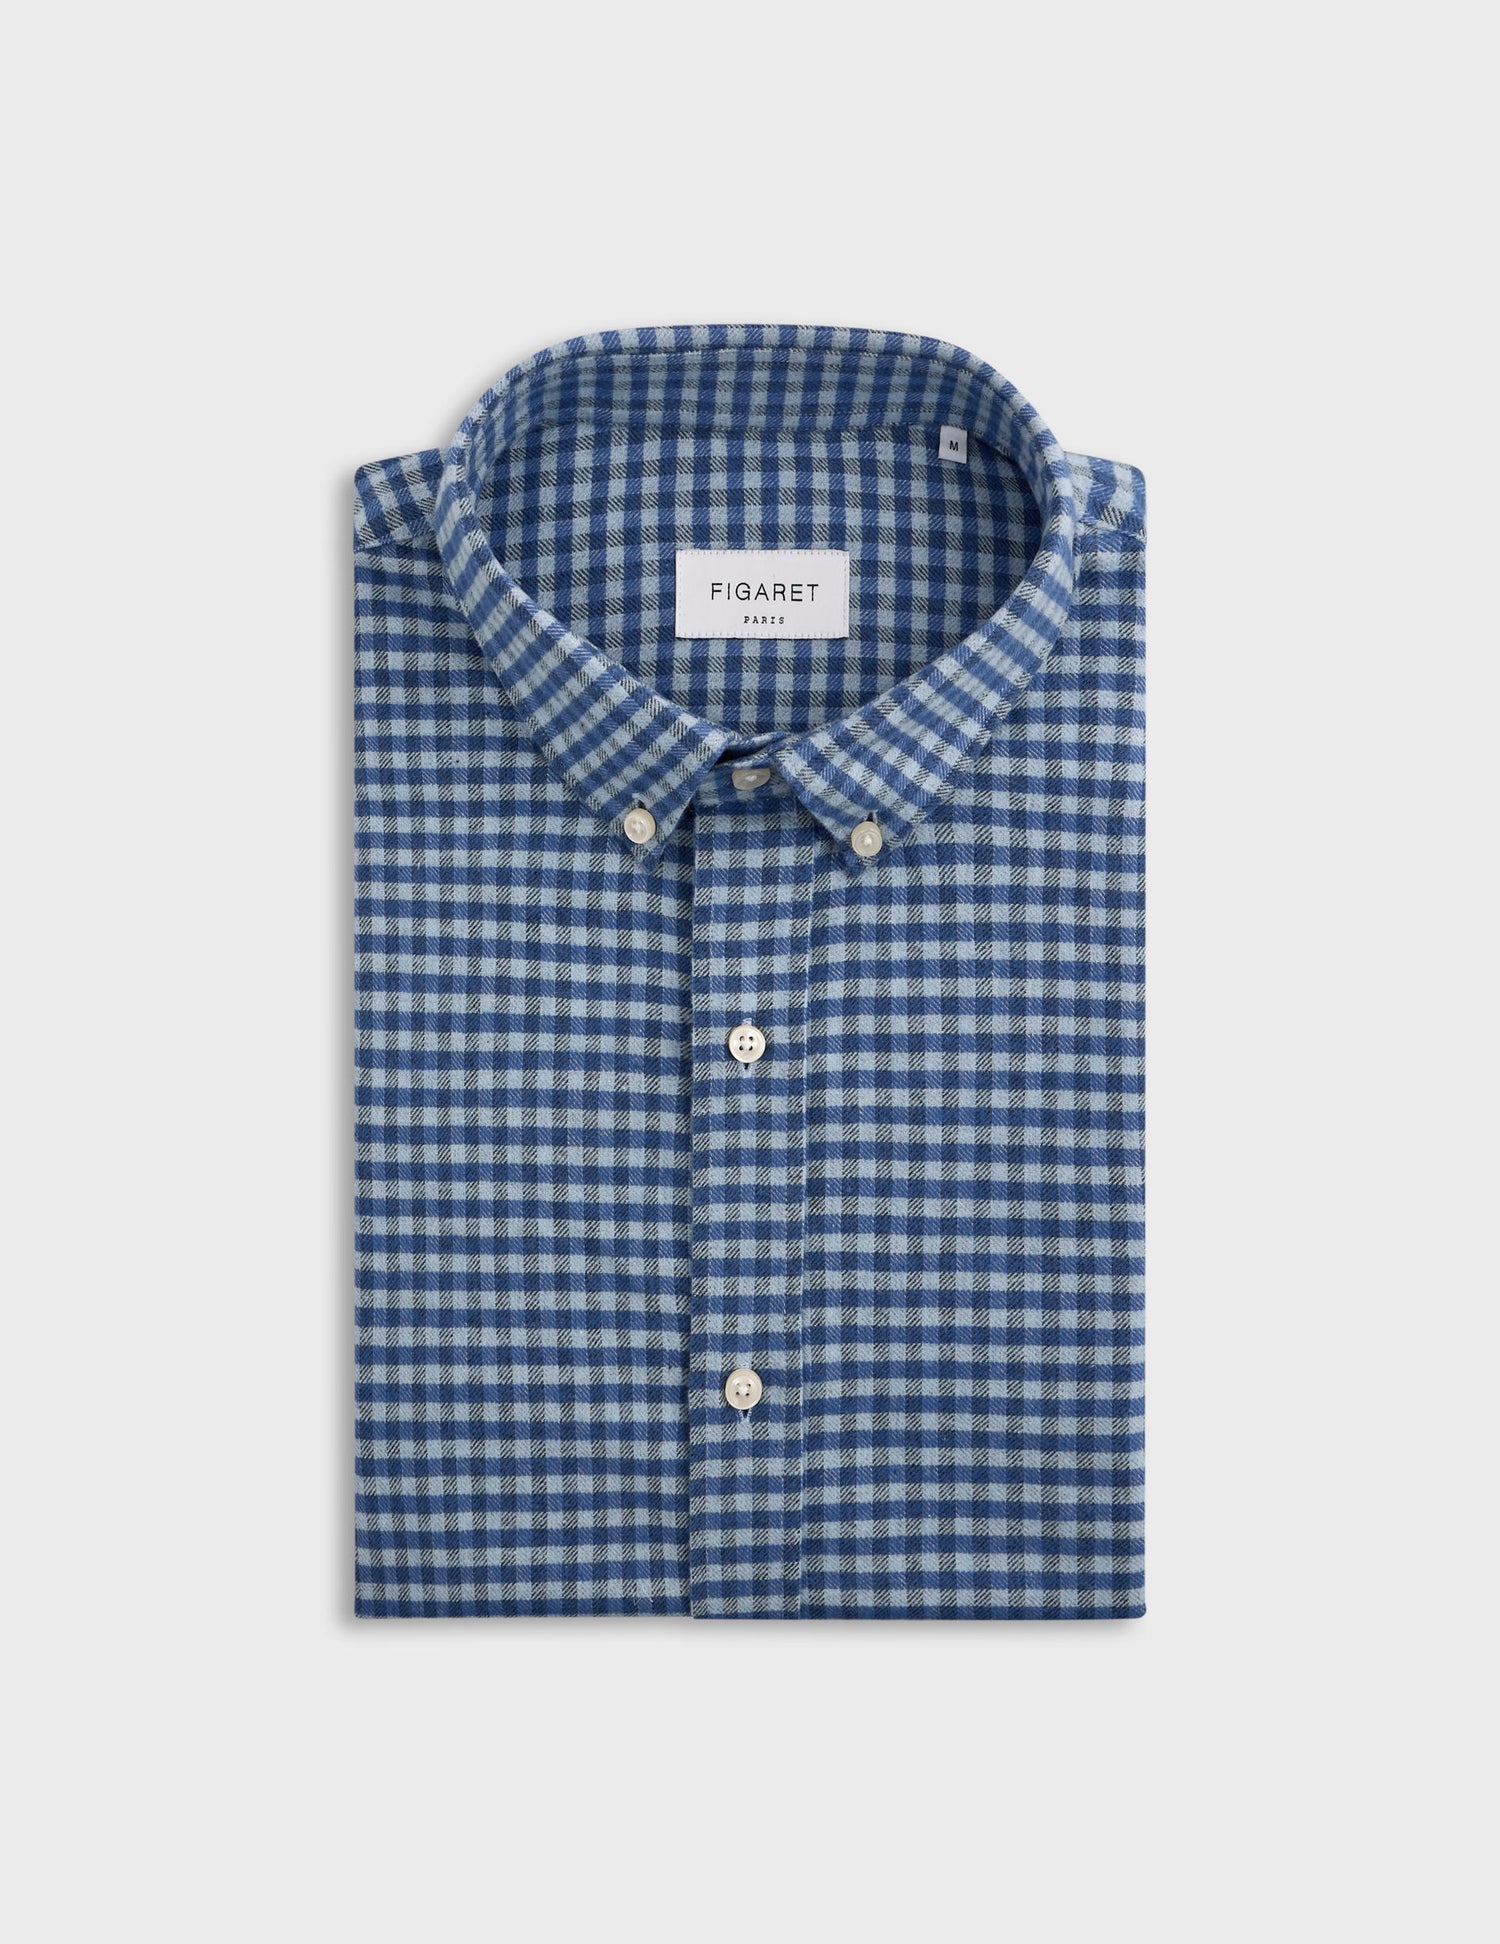 Blue checkedGaspard shirt - Flannel - American Collar#4